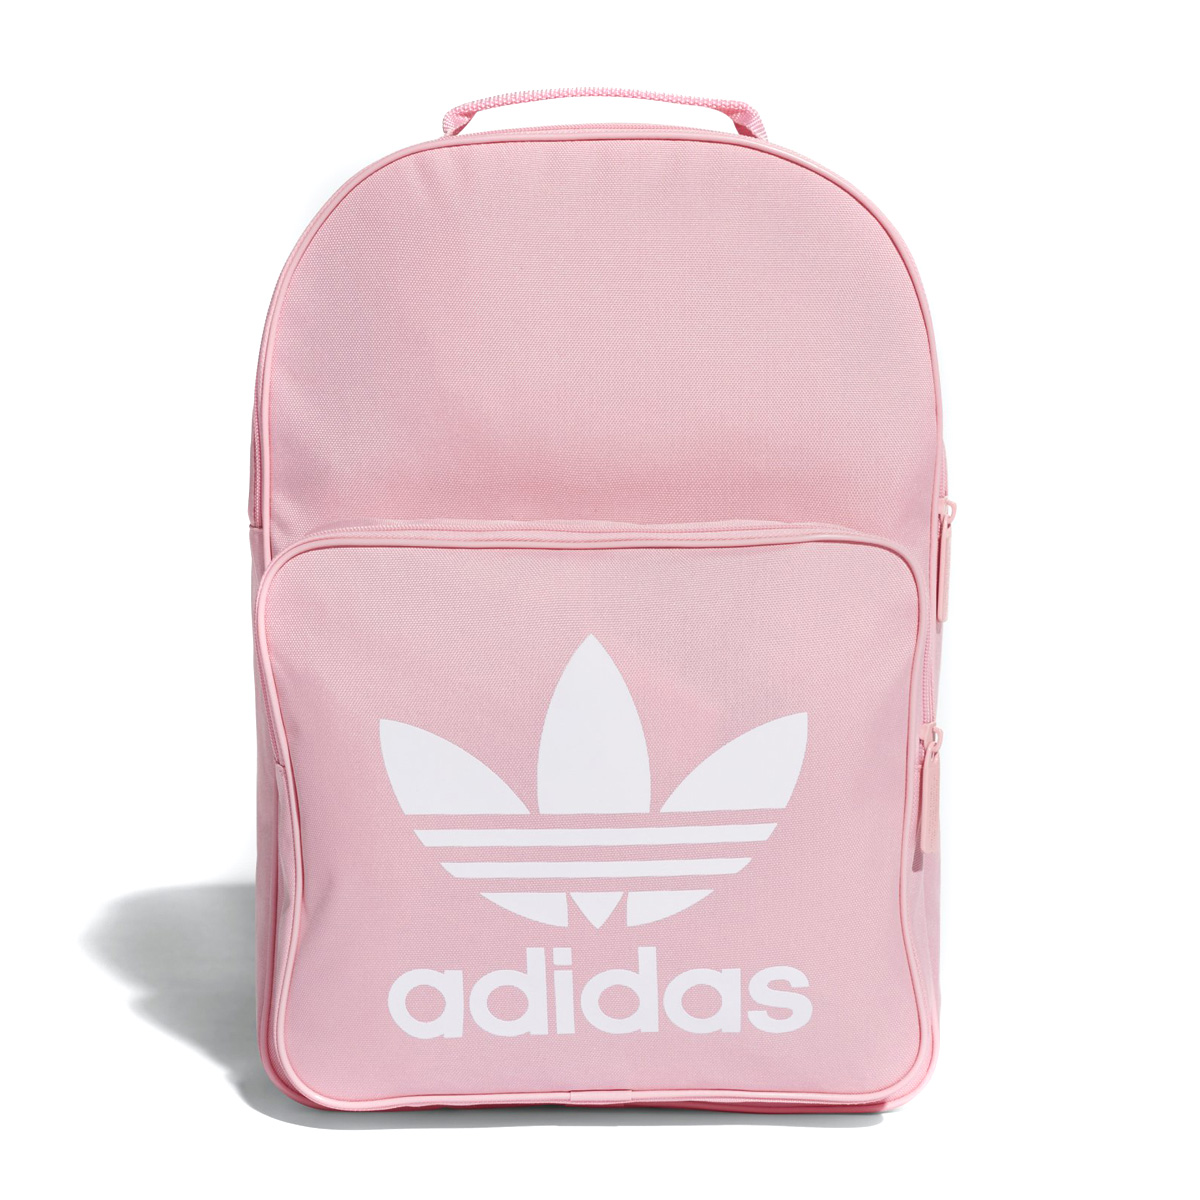 adidas pink bookbag